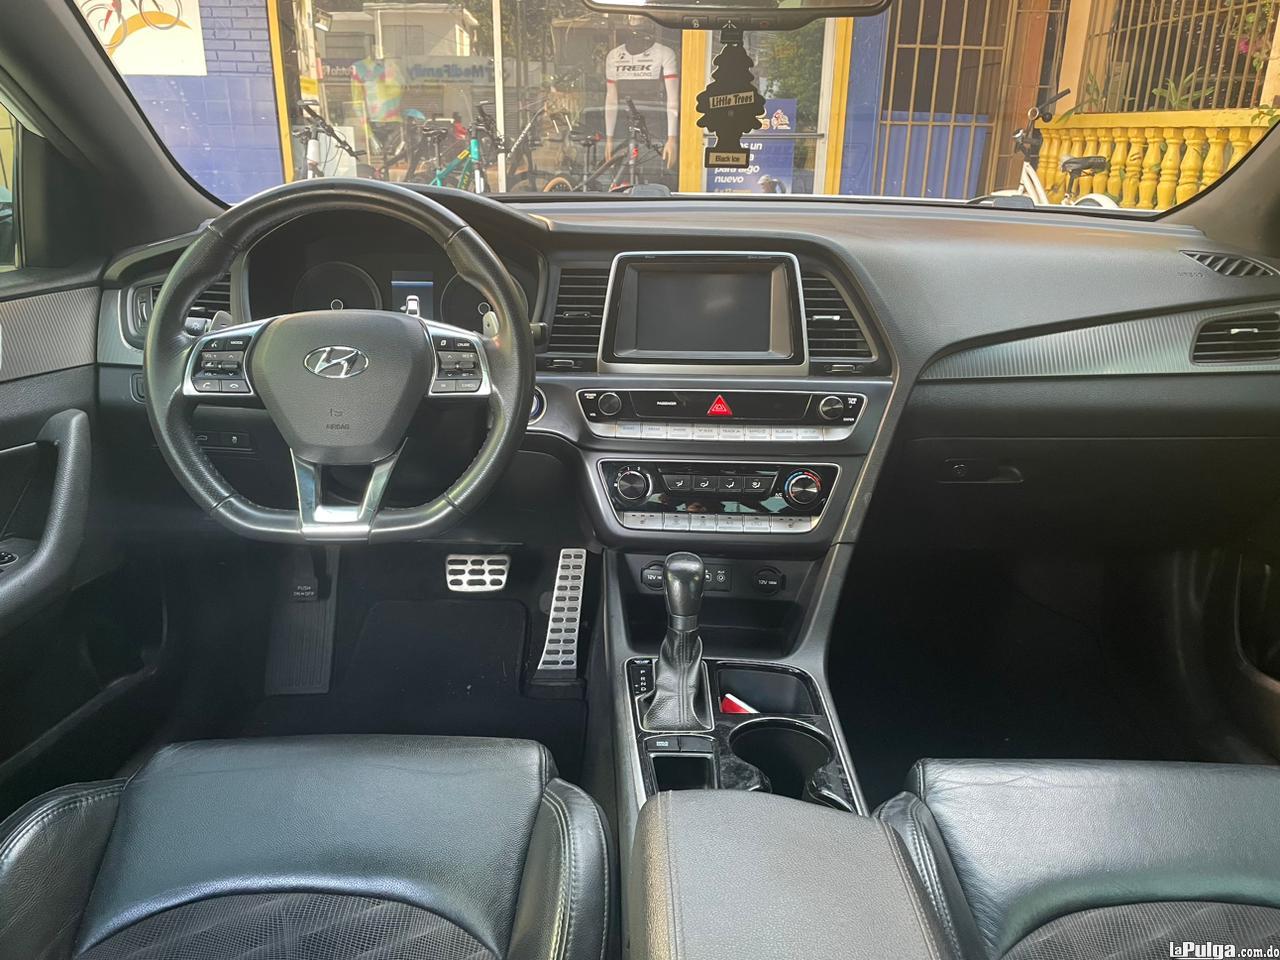 Se alquila Hyundai Sonata 2018 Gasolina Foto 7122486-4.jpg